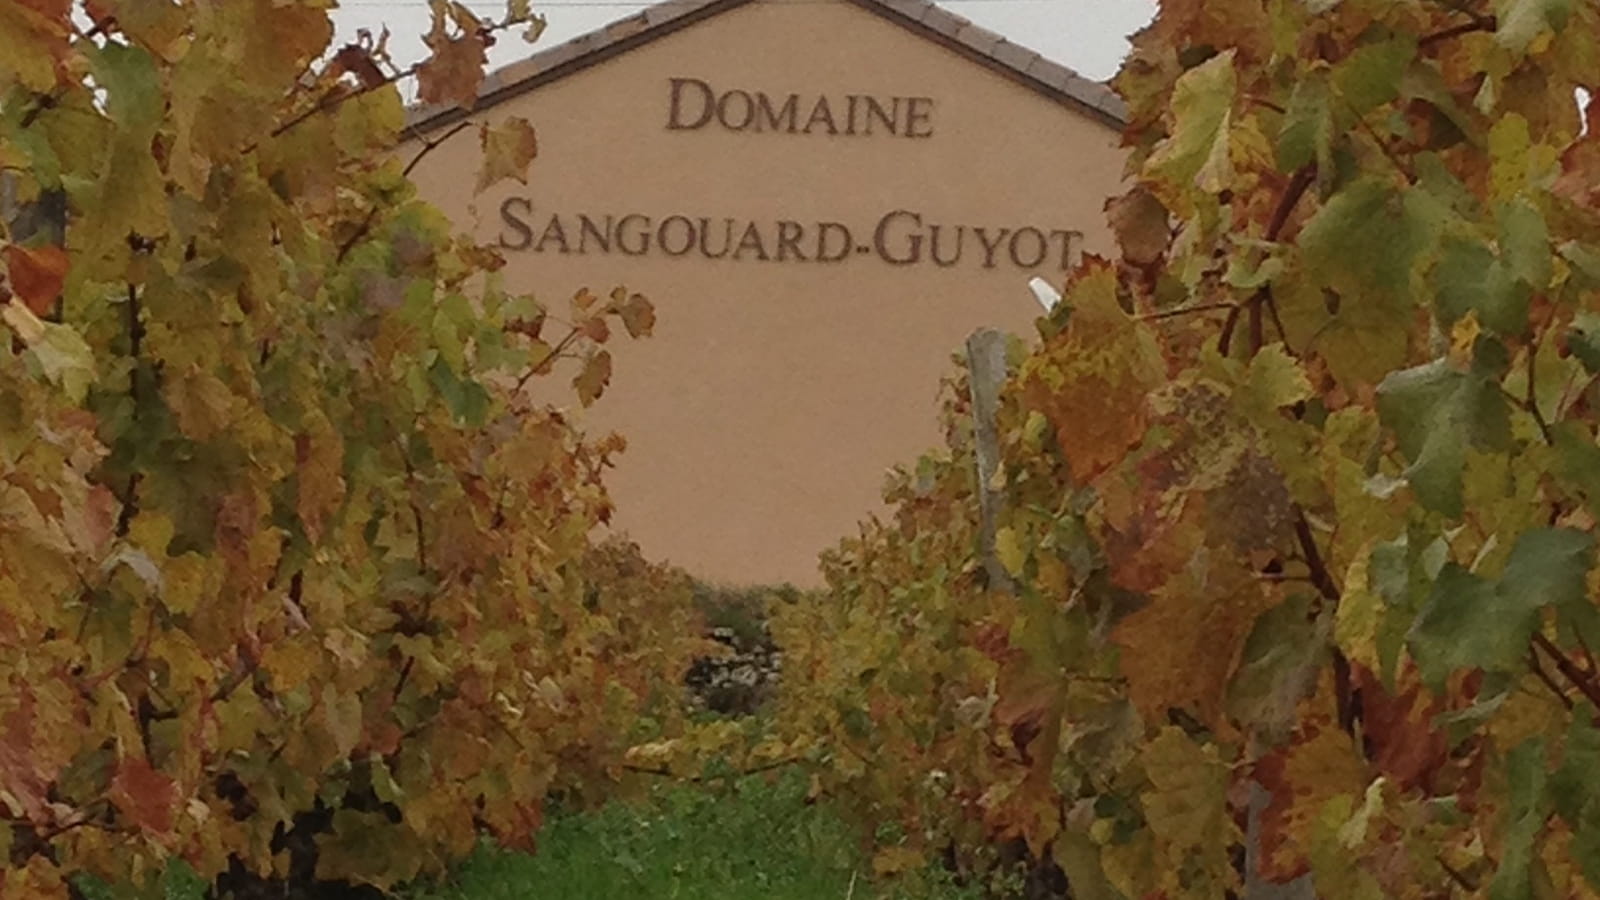 Sangouard-Guyot